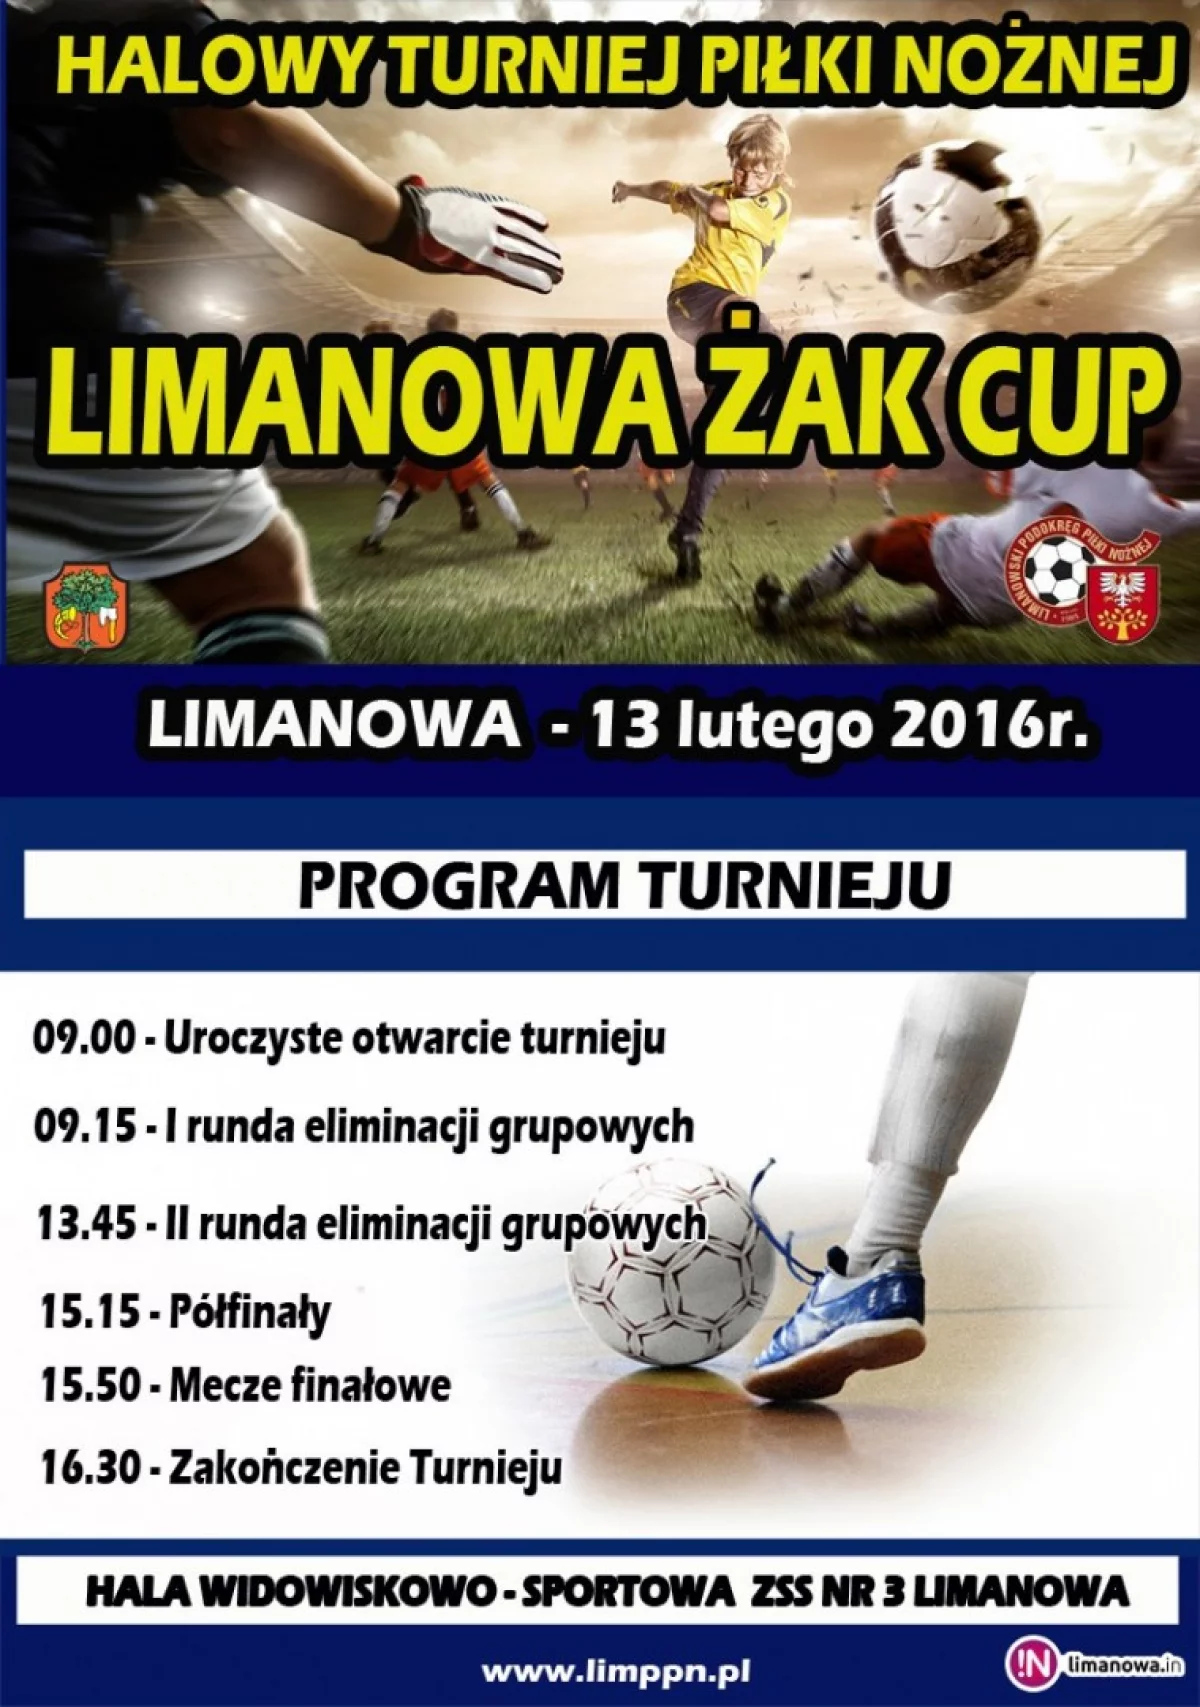 Limanovia Żak Cup 2016: druga edycja turnieju